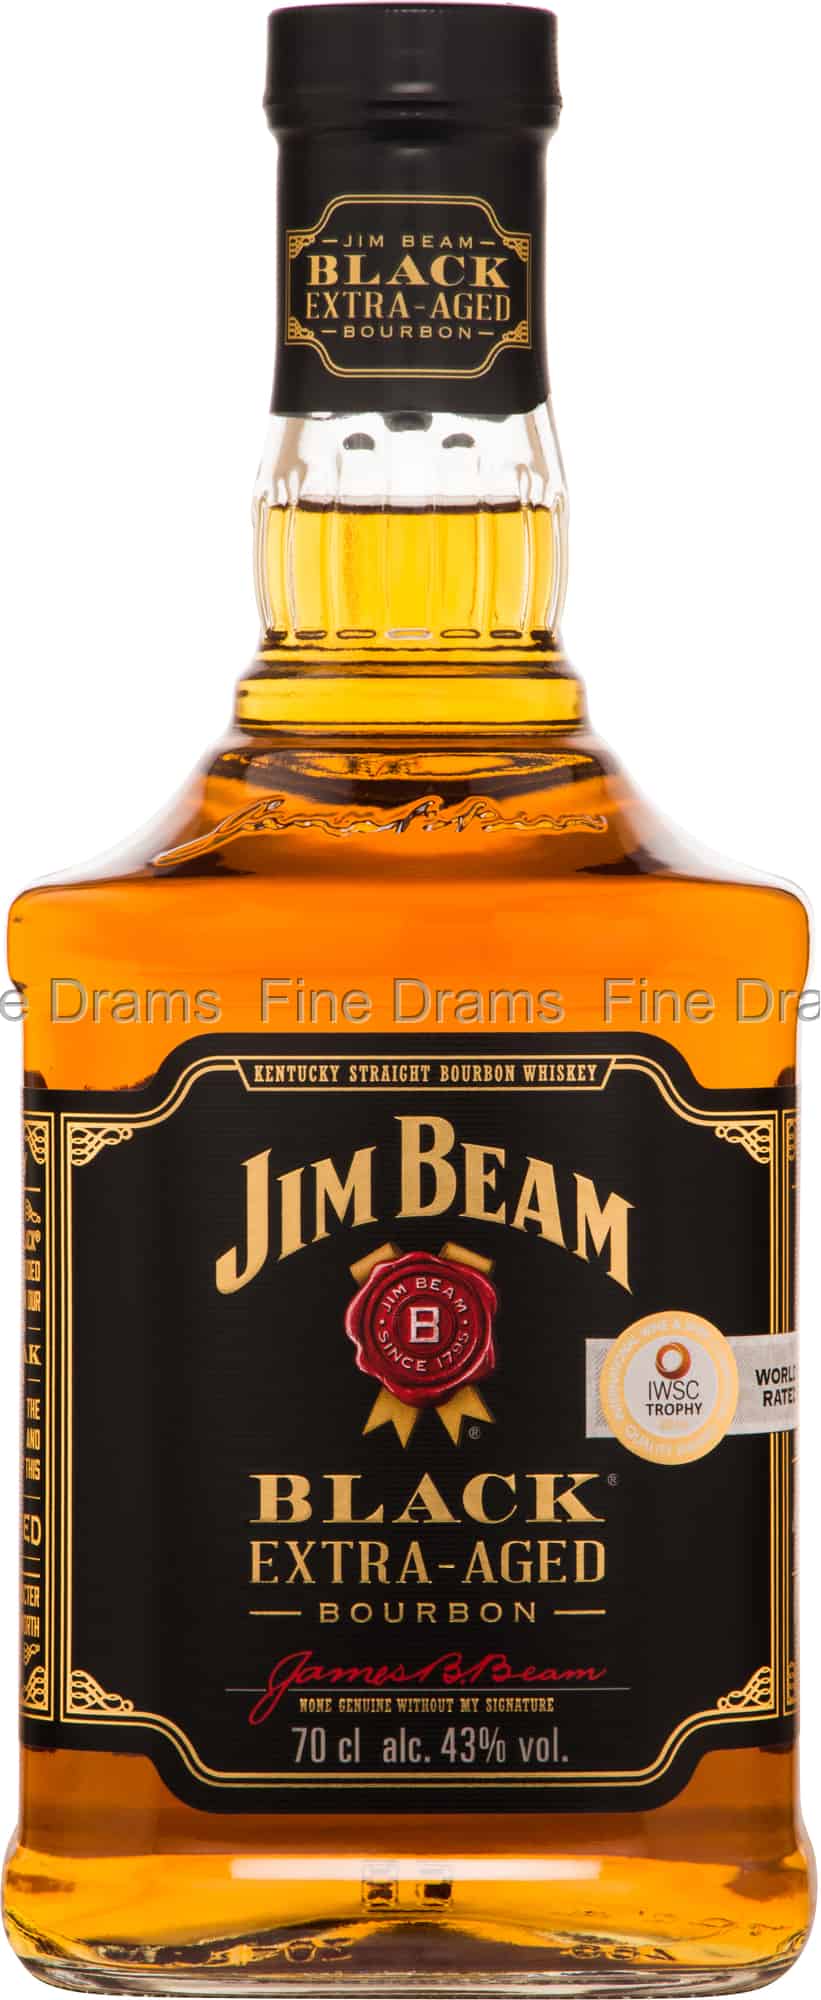 Jim Beam Black Bourbon Extra-Aged